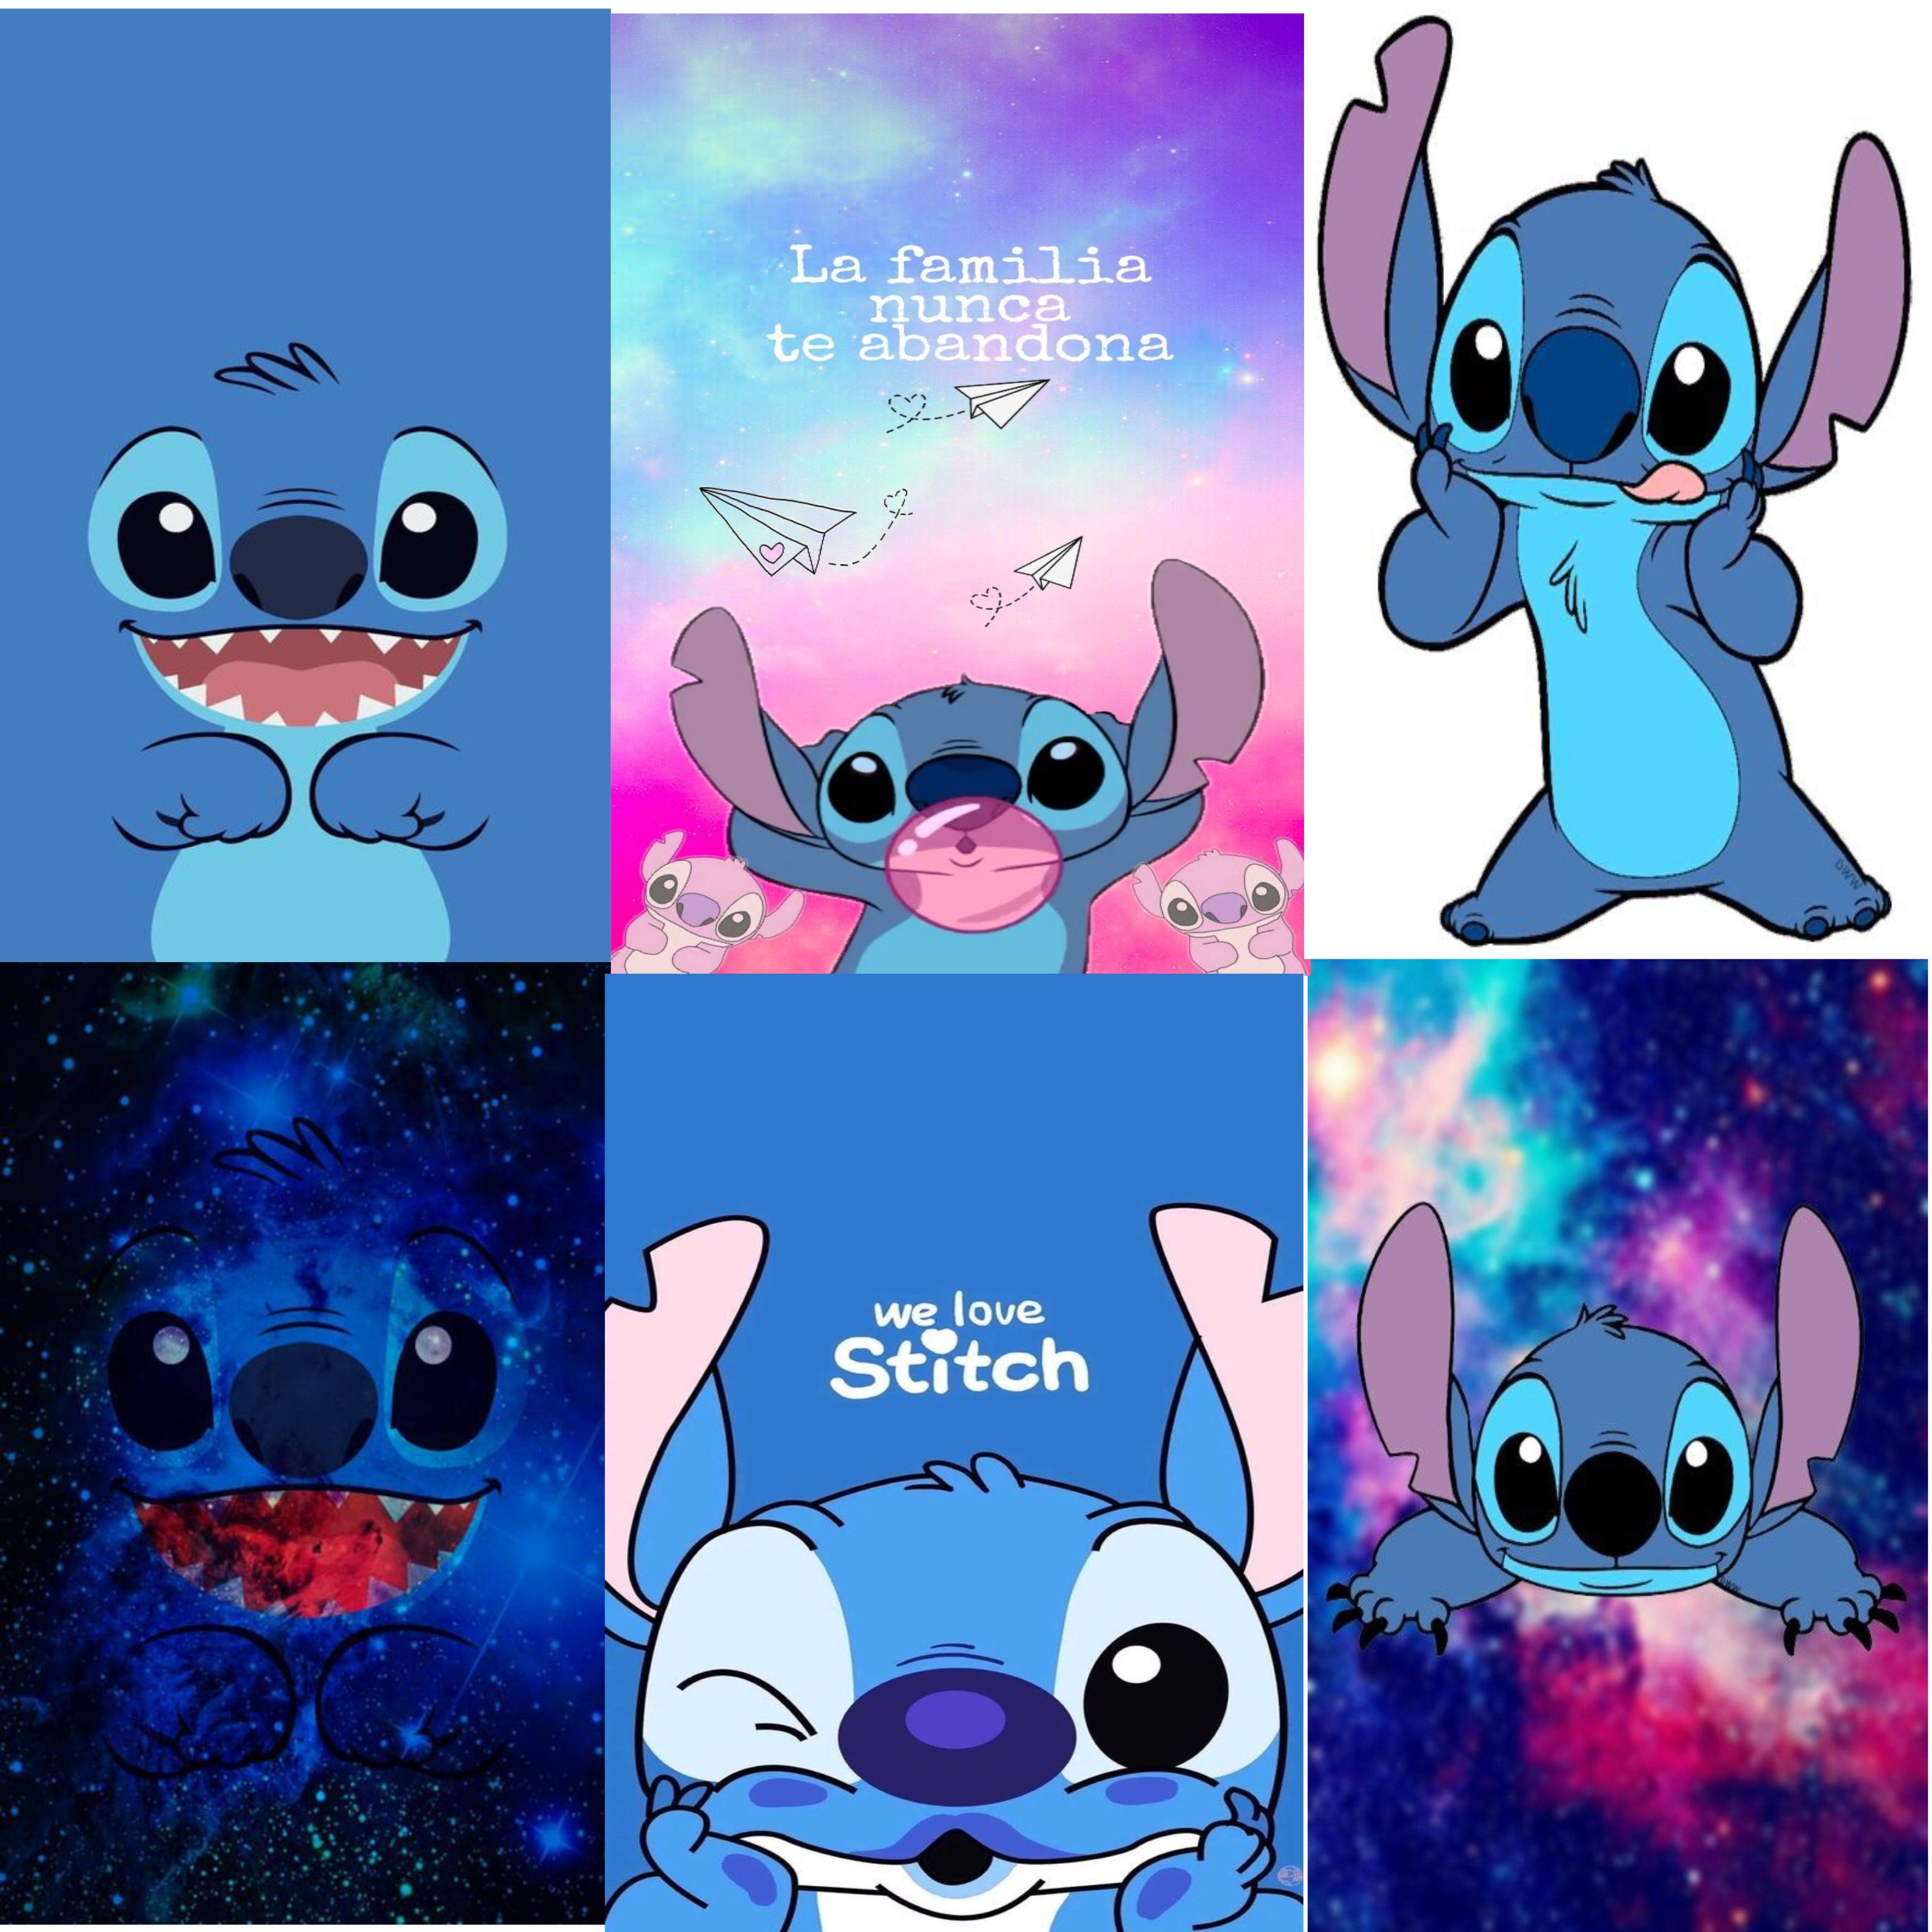 Stitch. Disney characters wallpaper, Cartoon wallpaper iphone, Cute galaxy wallpaper